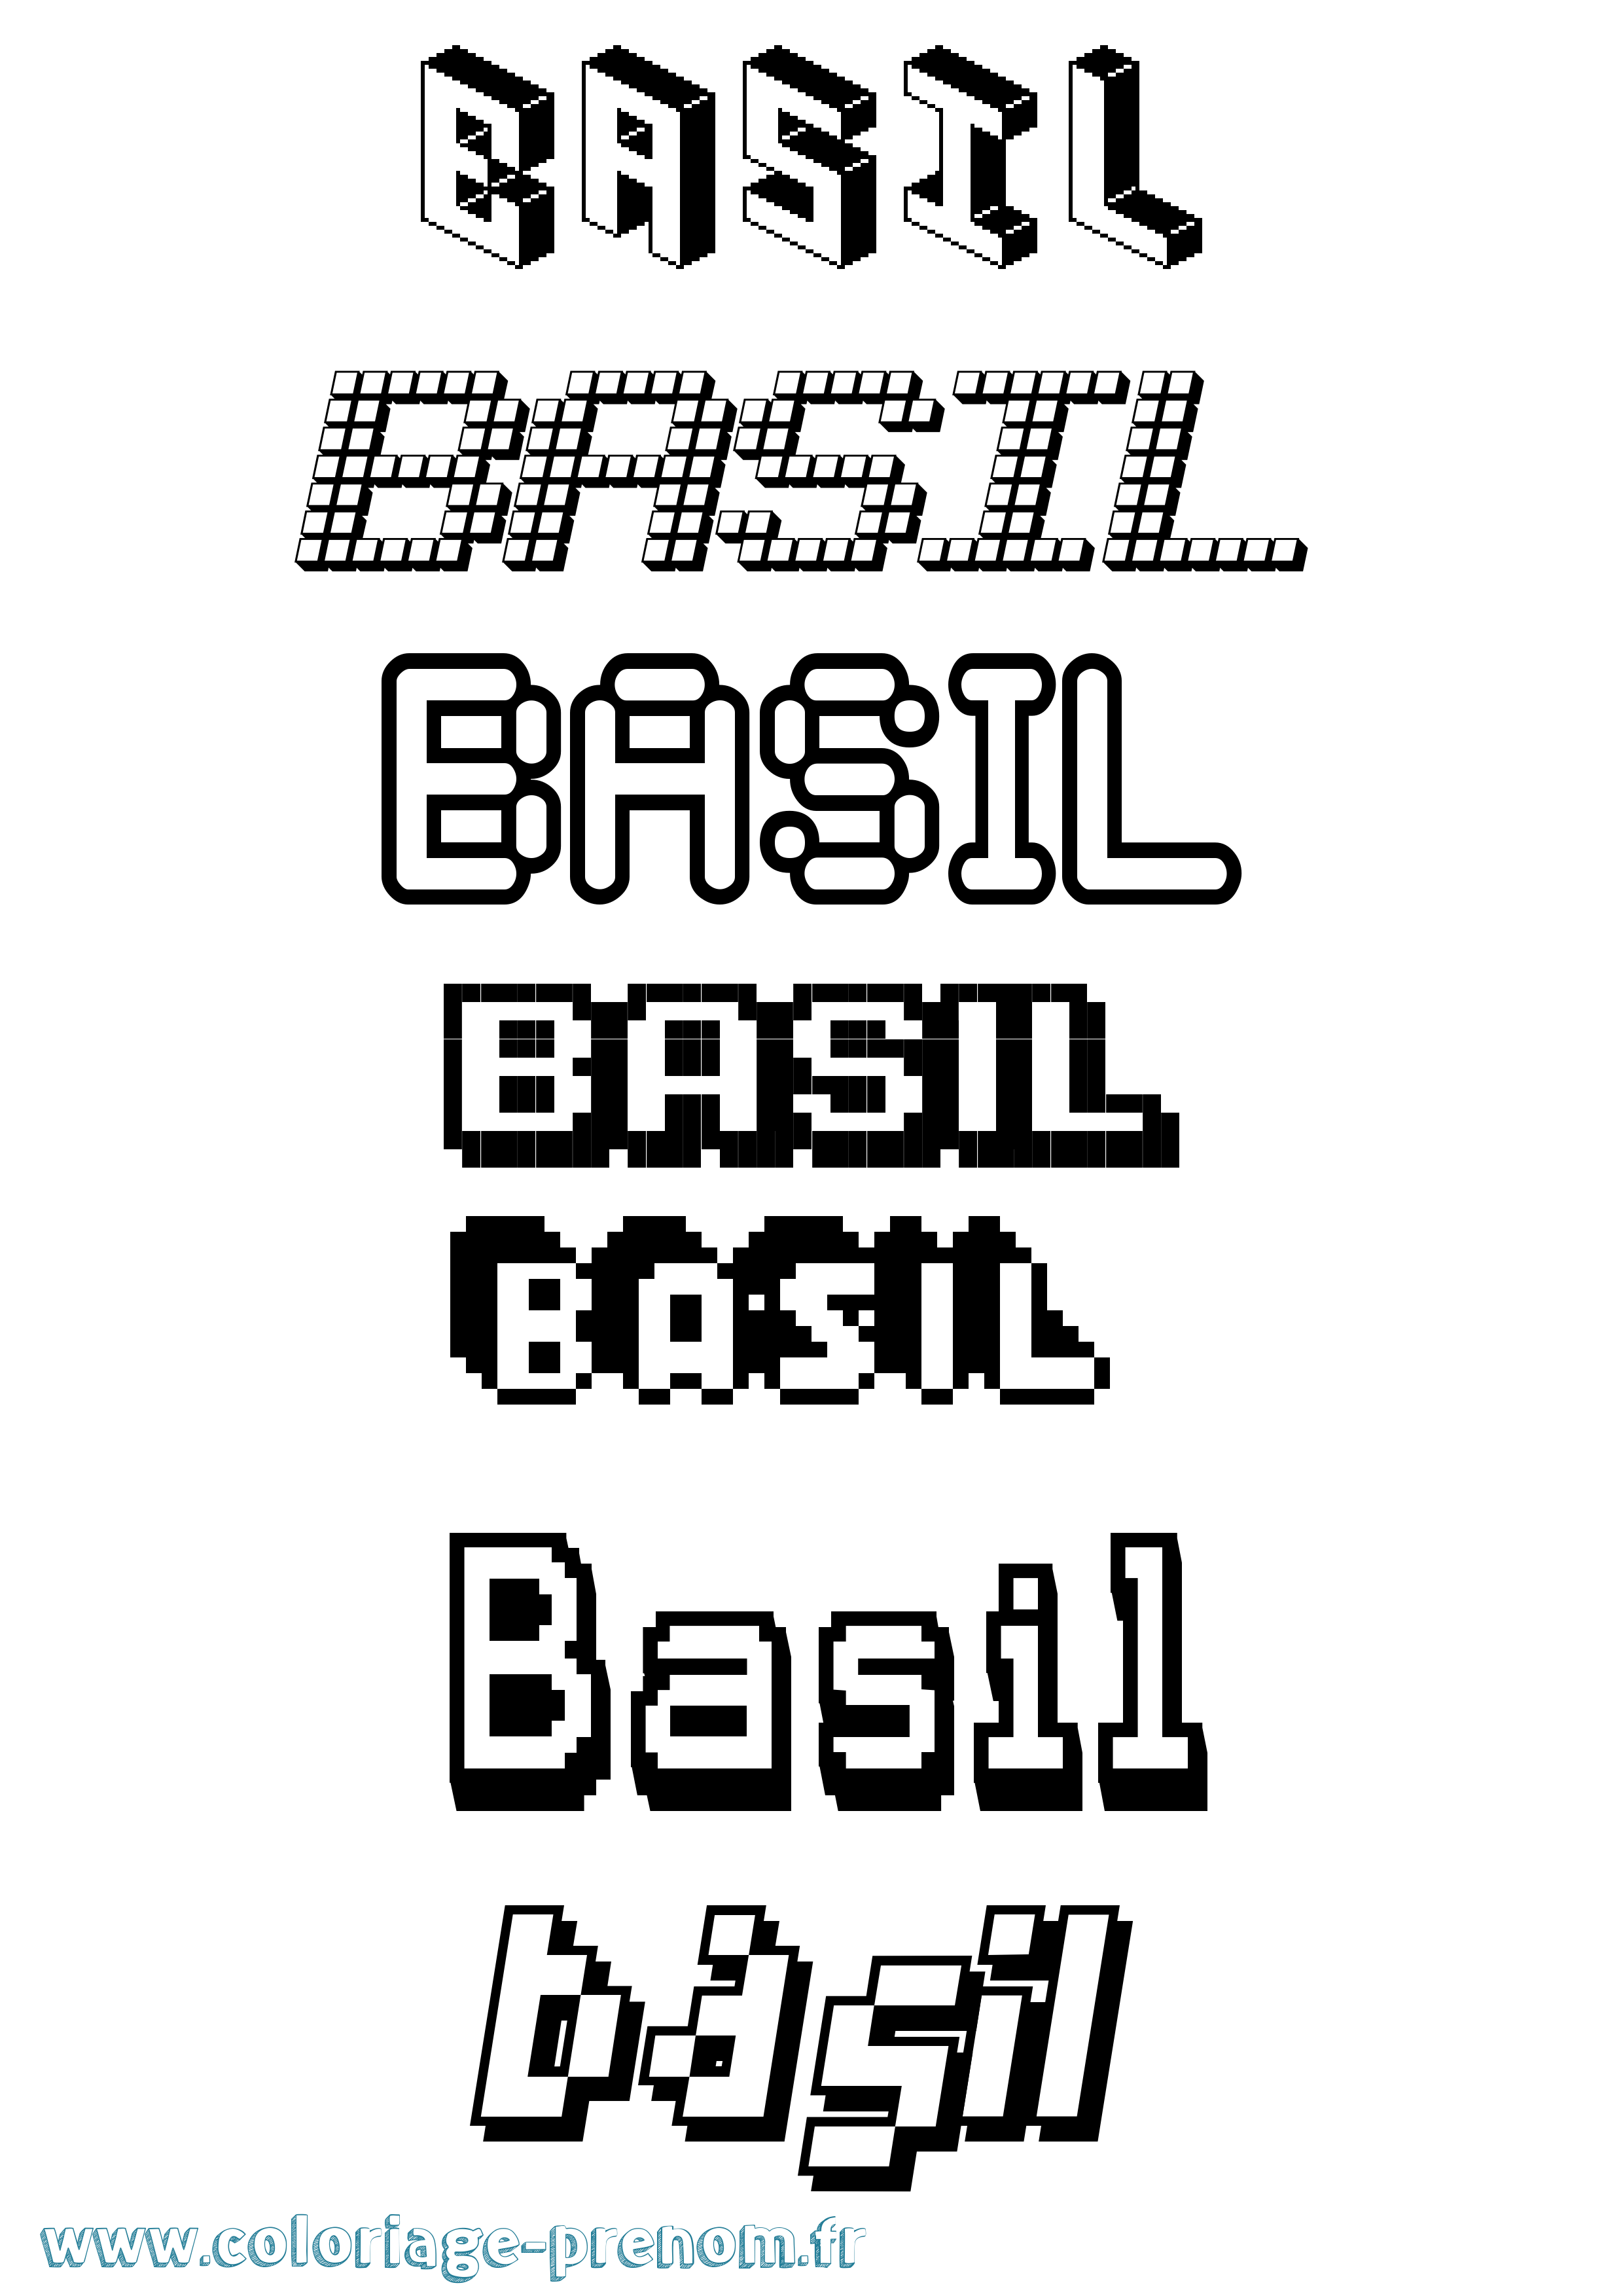 Coloriage prénom Basil Pixel